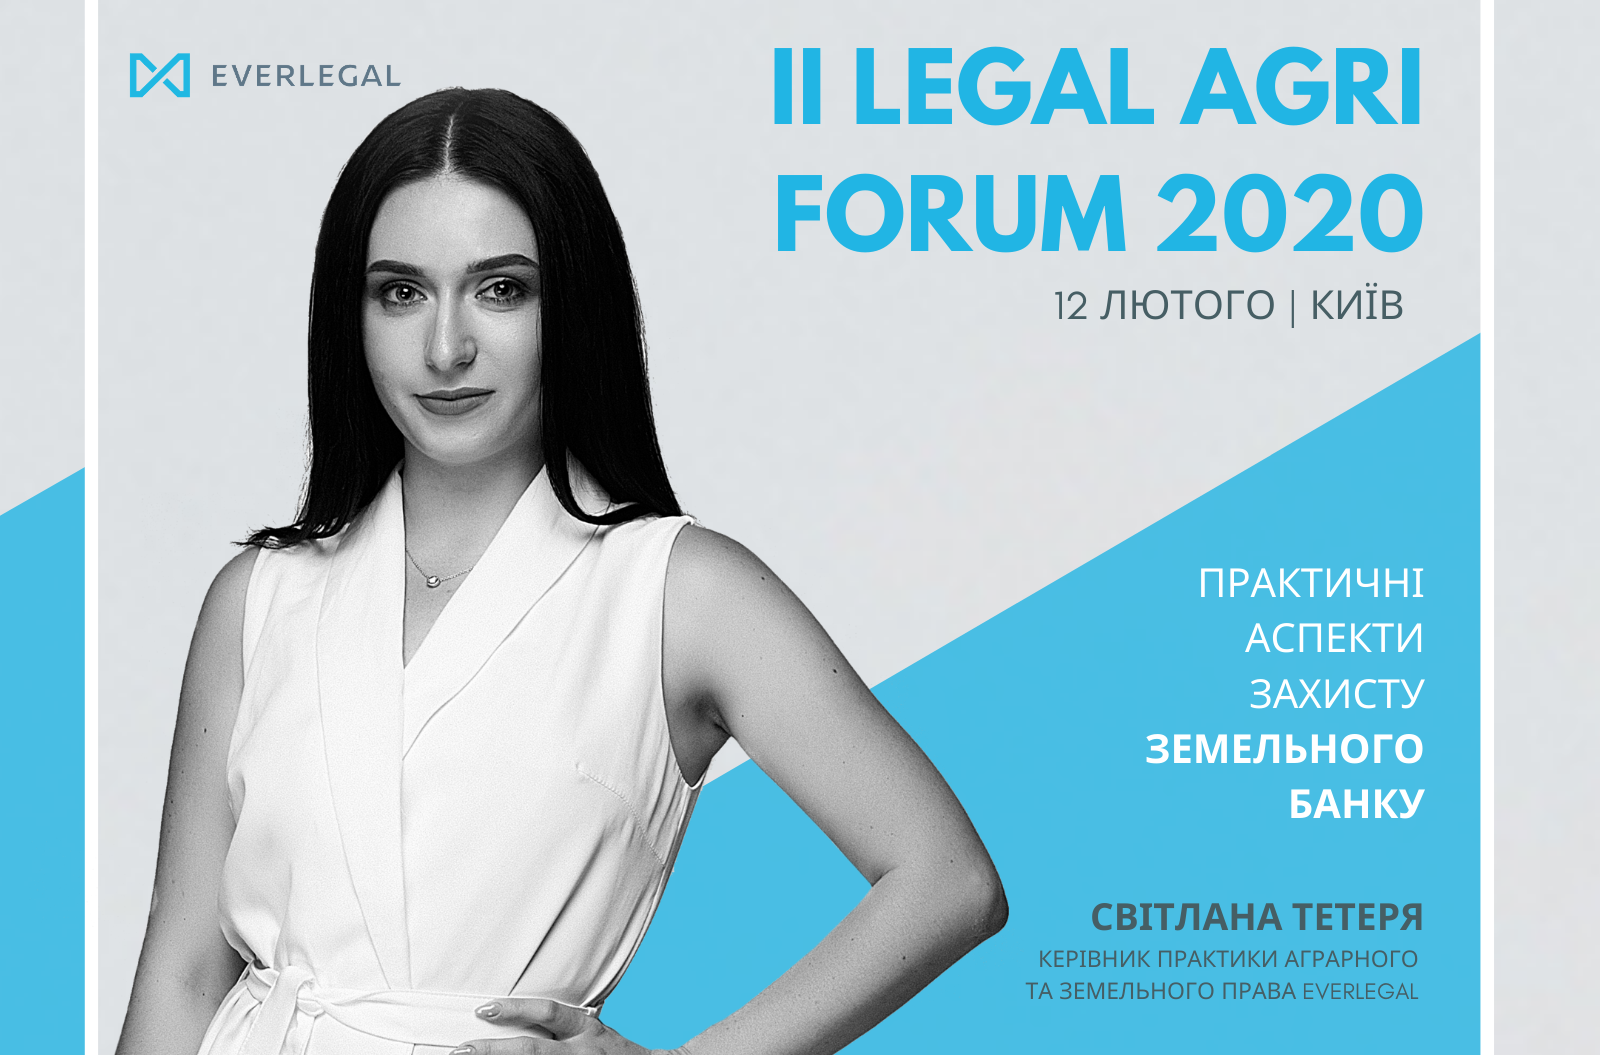 EVERLEGAL at II Business & Legal Agri Forum 2020